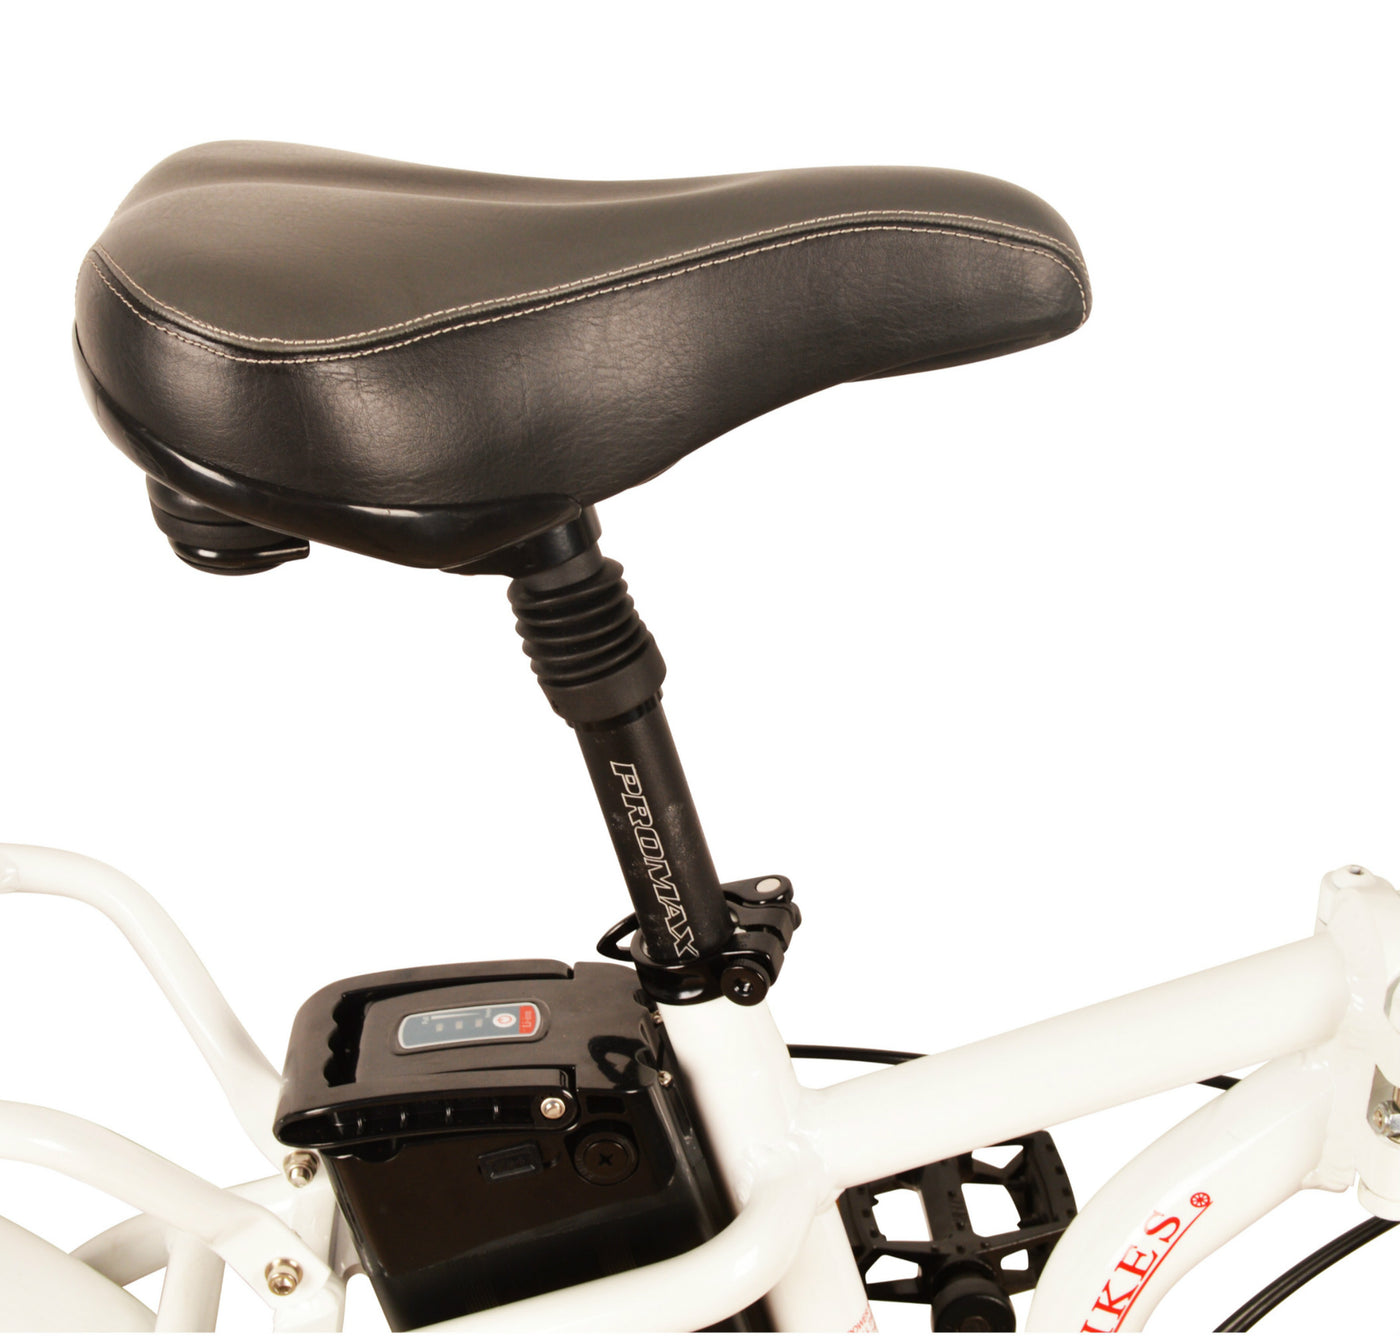 DJ Folding Bike, electric folding fat bike with quick release shock absorbing adjustable seat